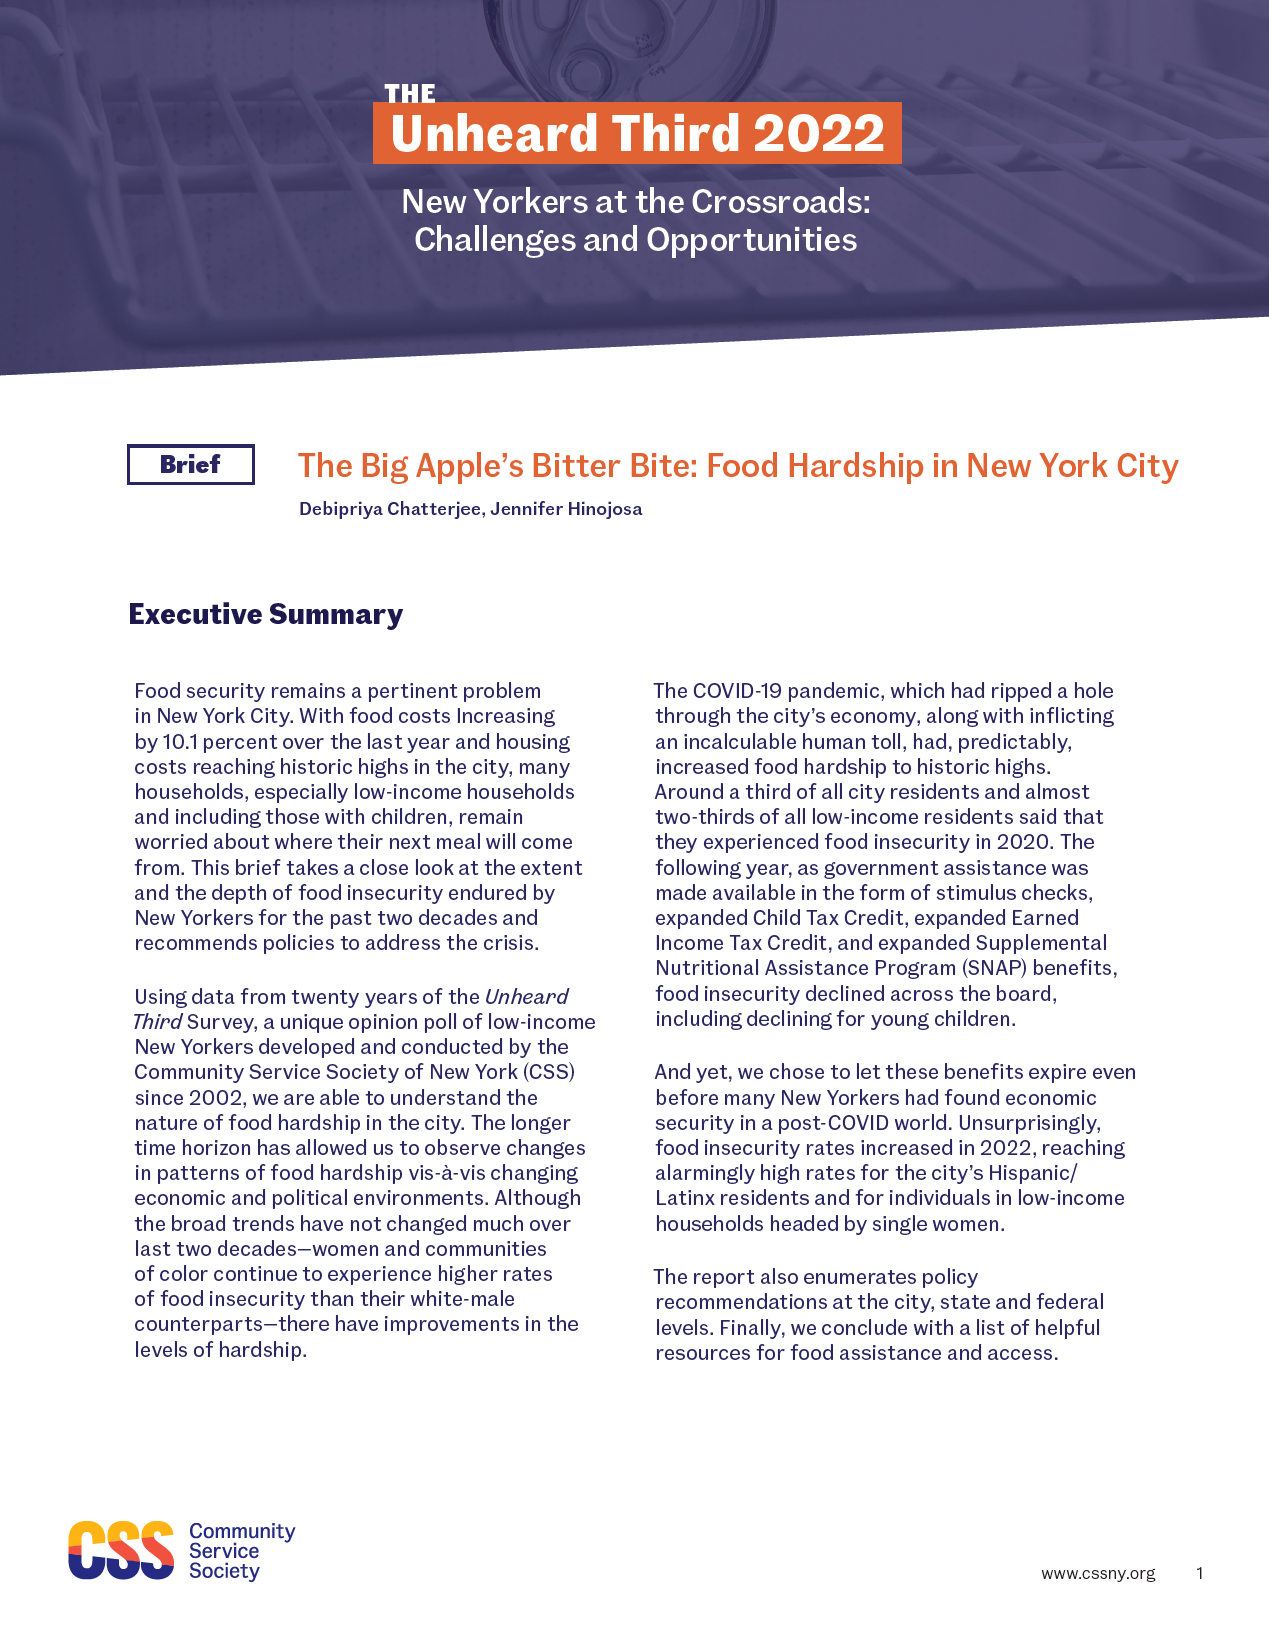 The Big Apple’s Bitter Bite: Food Hardship in New York City